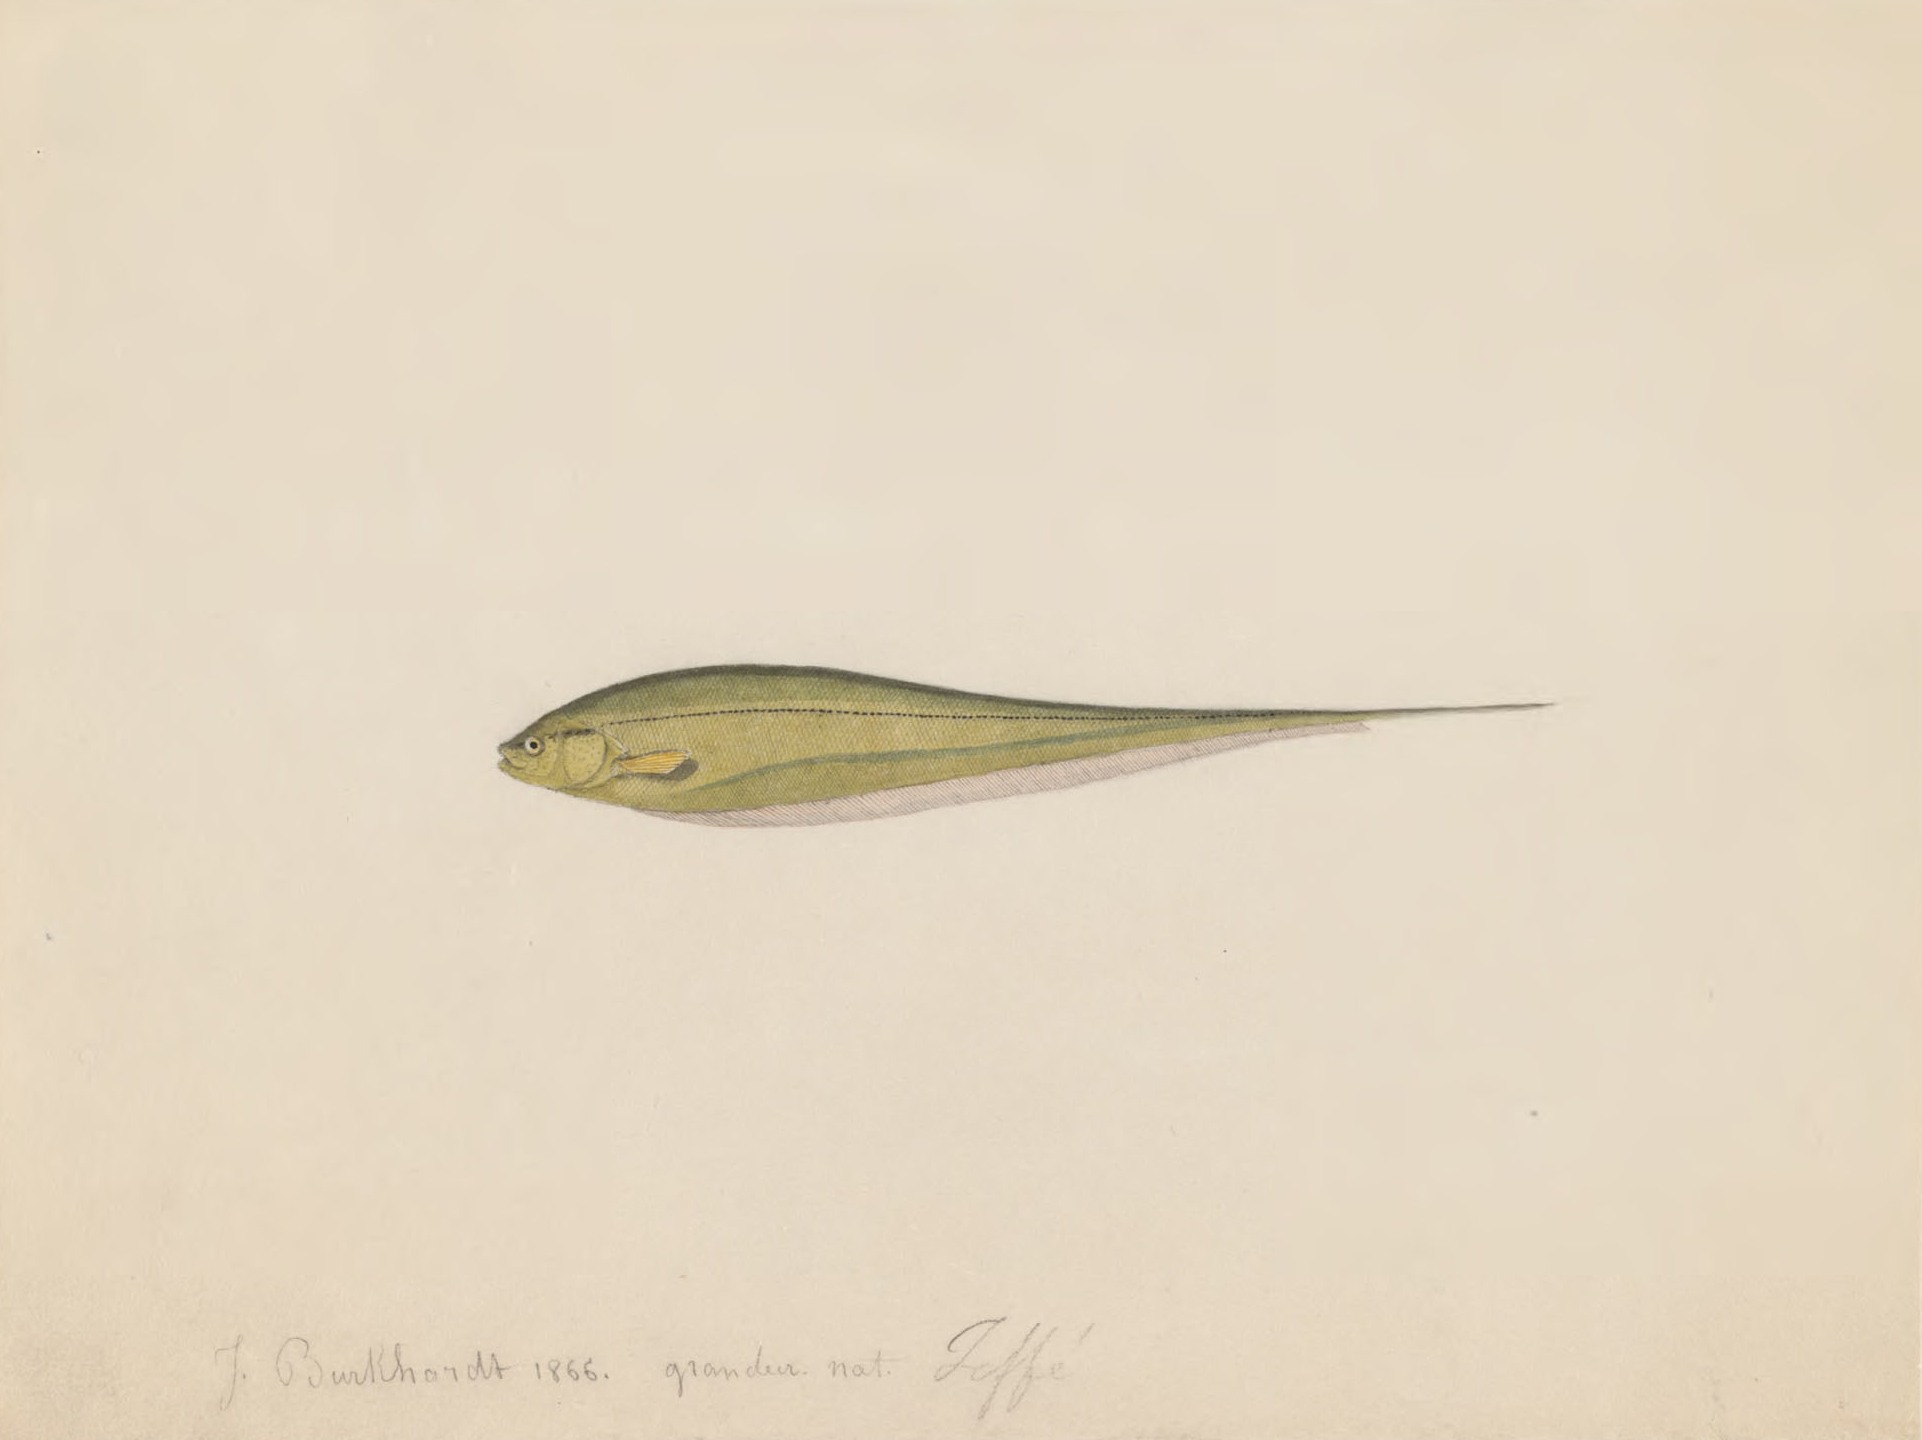 (Eigenmannia virescens)